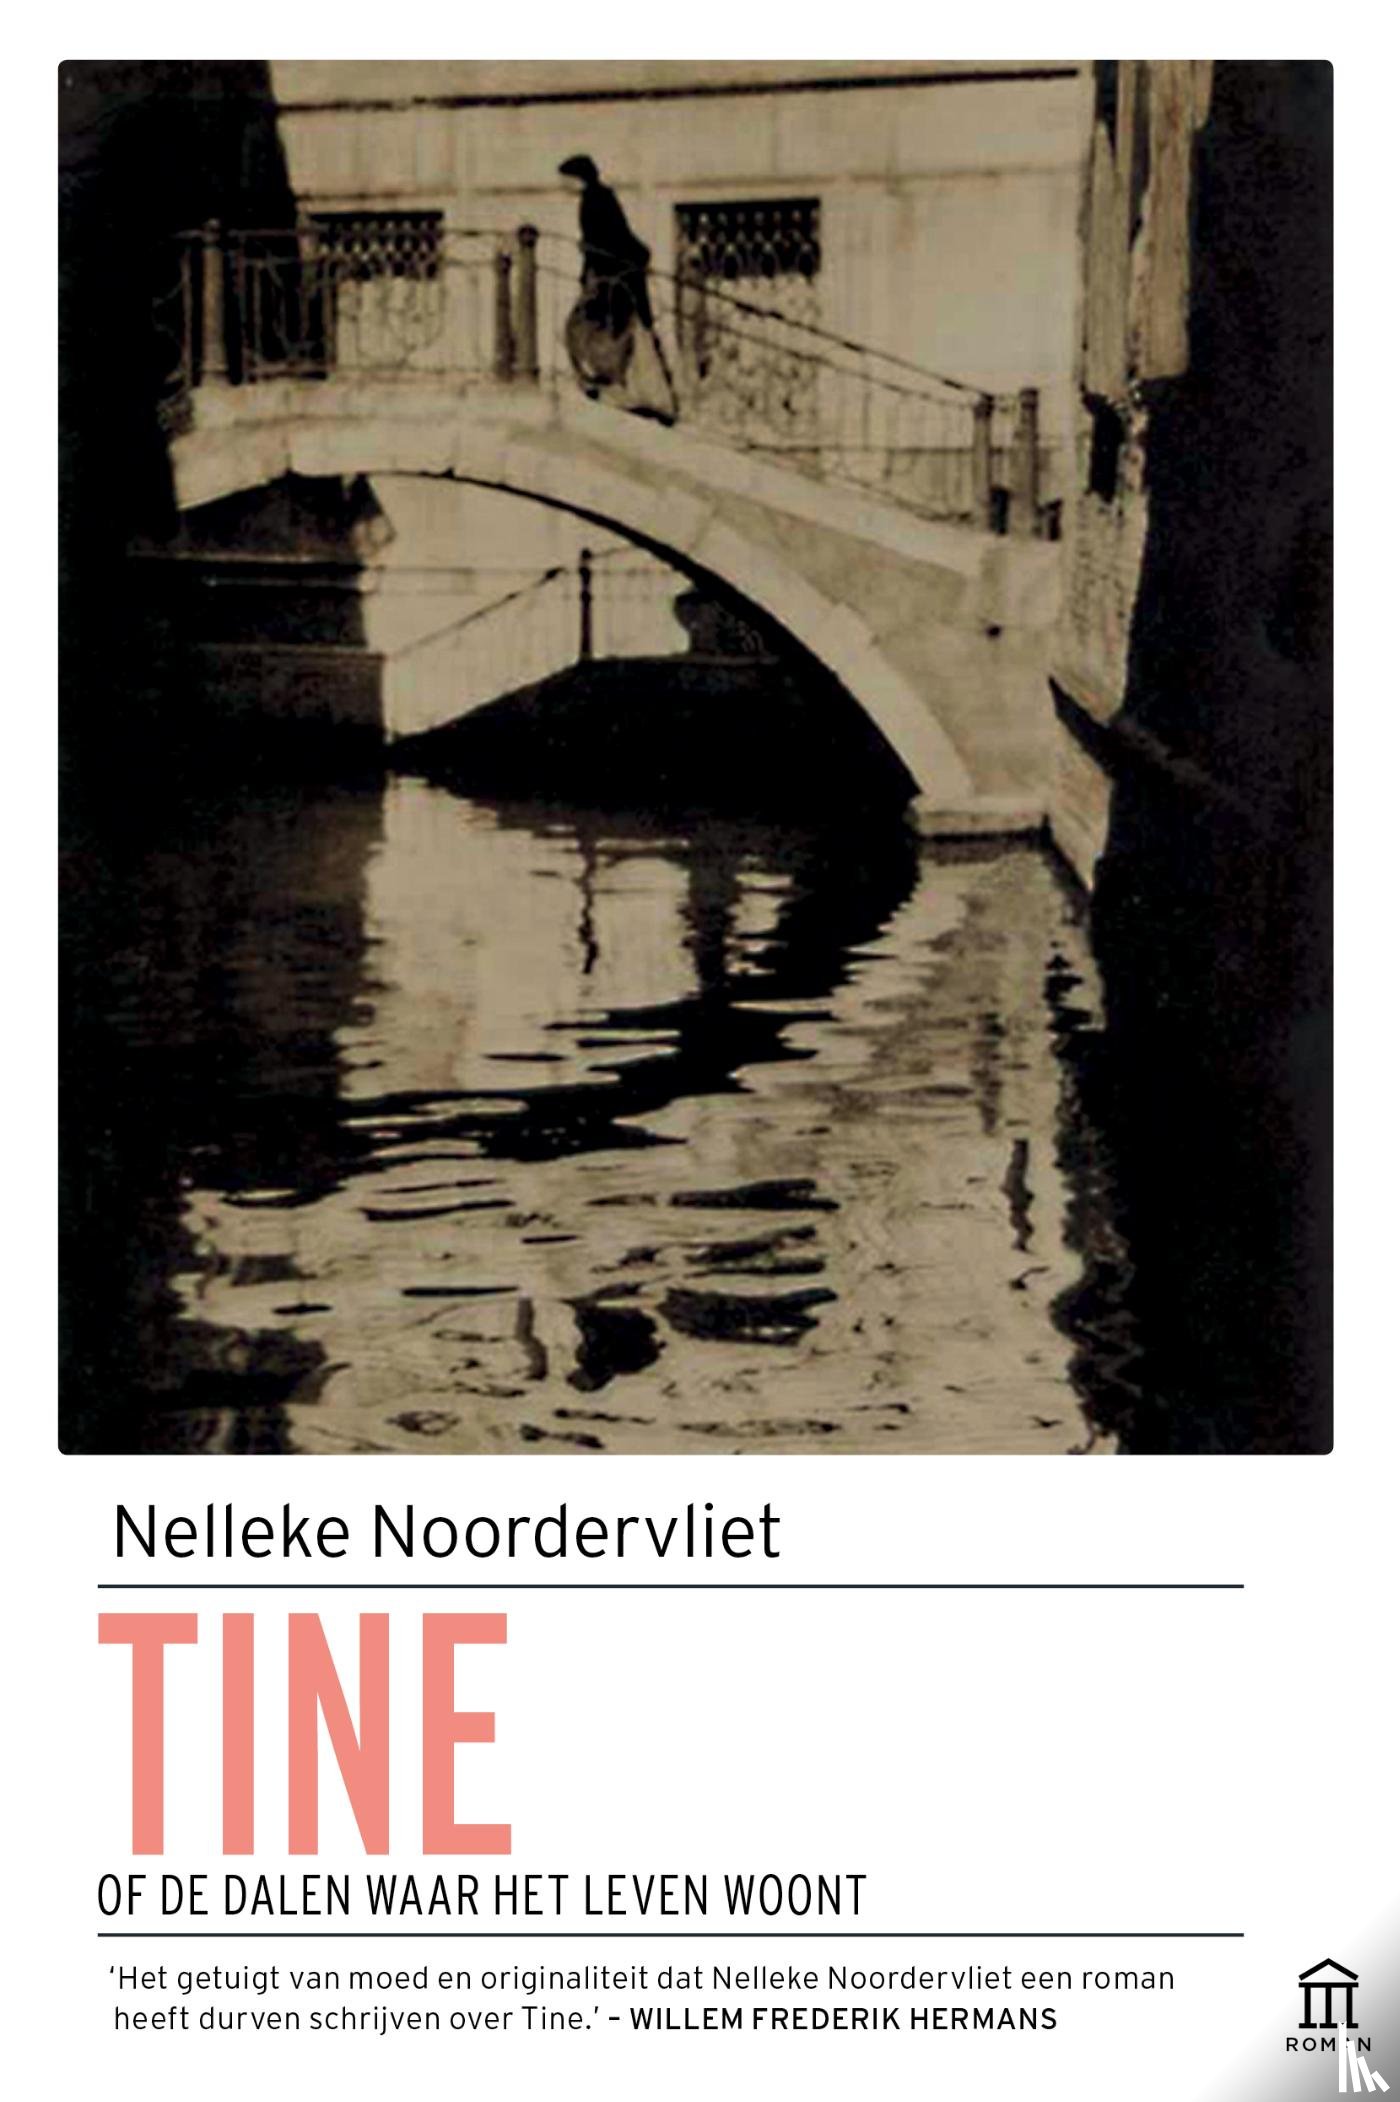 Noordervliet, Nelleke - Tine